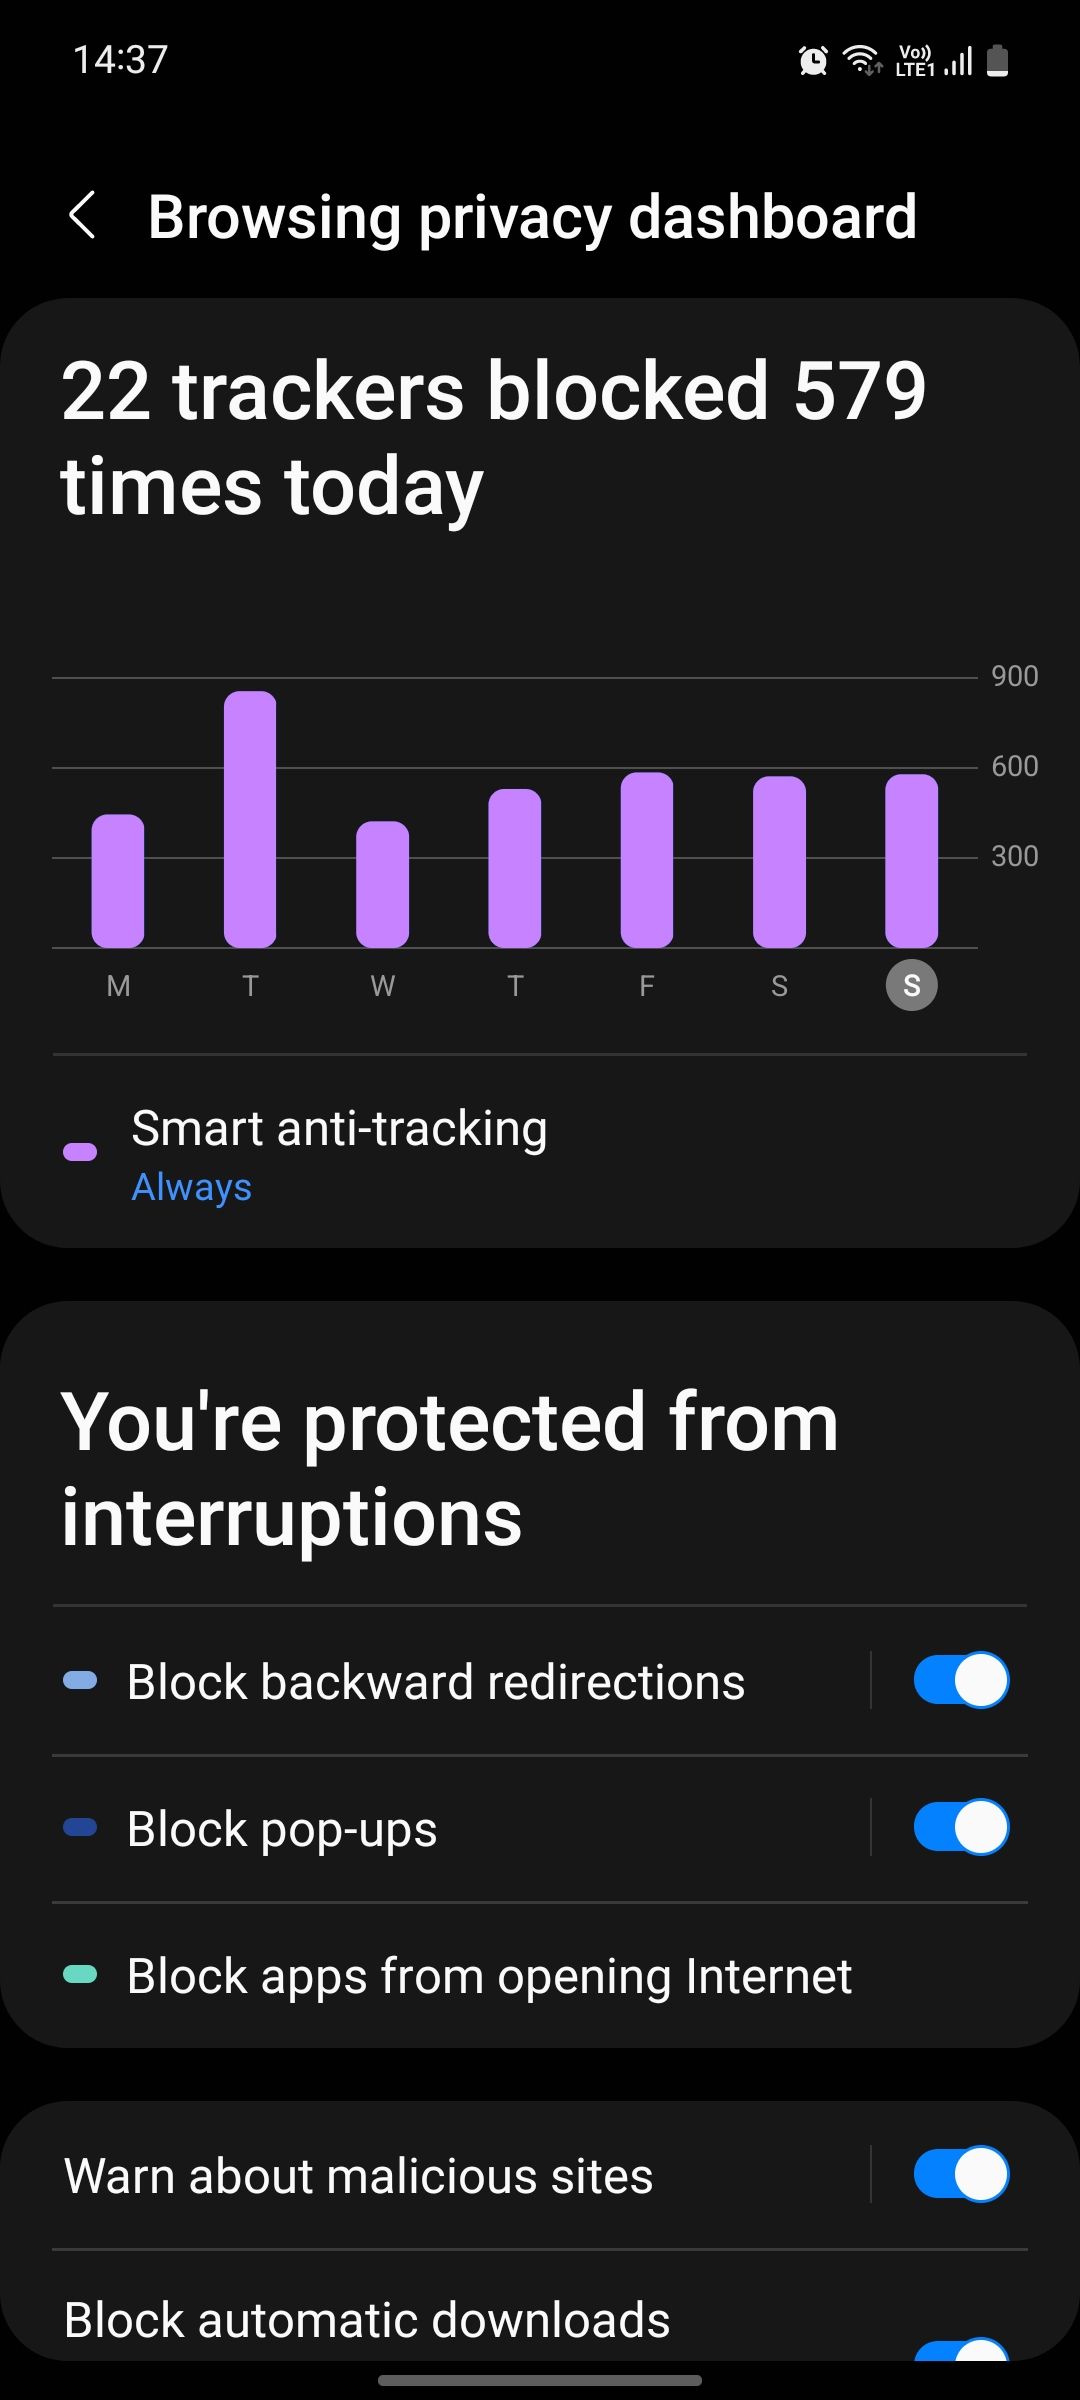 Samsung Internet browsing privacy dashboard